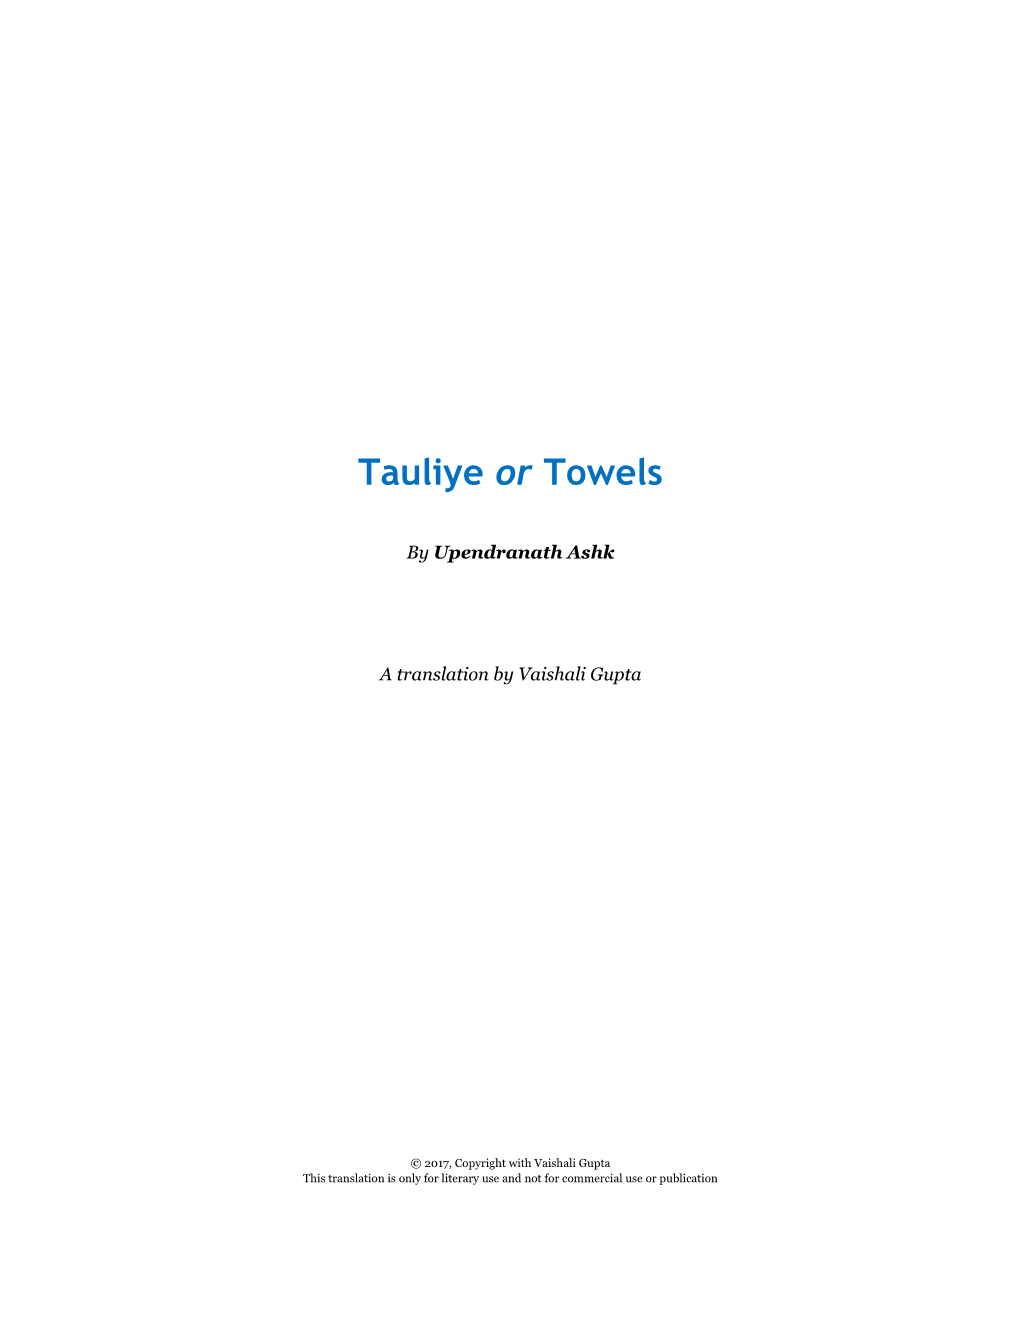 Tauliye Or Towels, a Translation